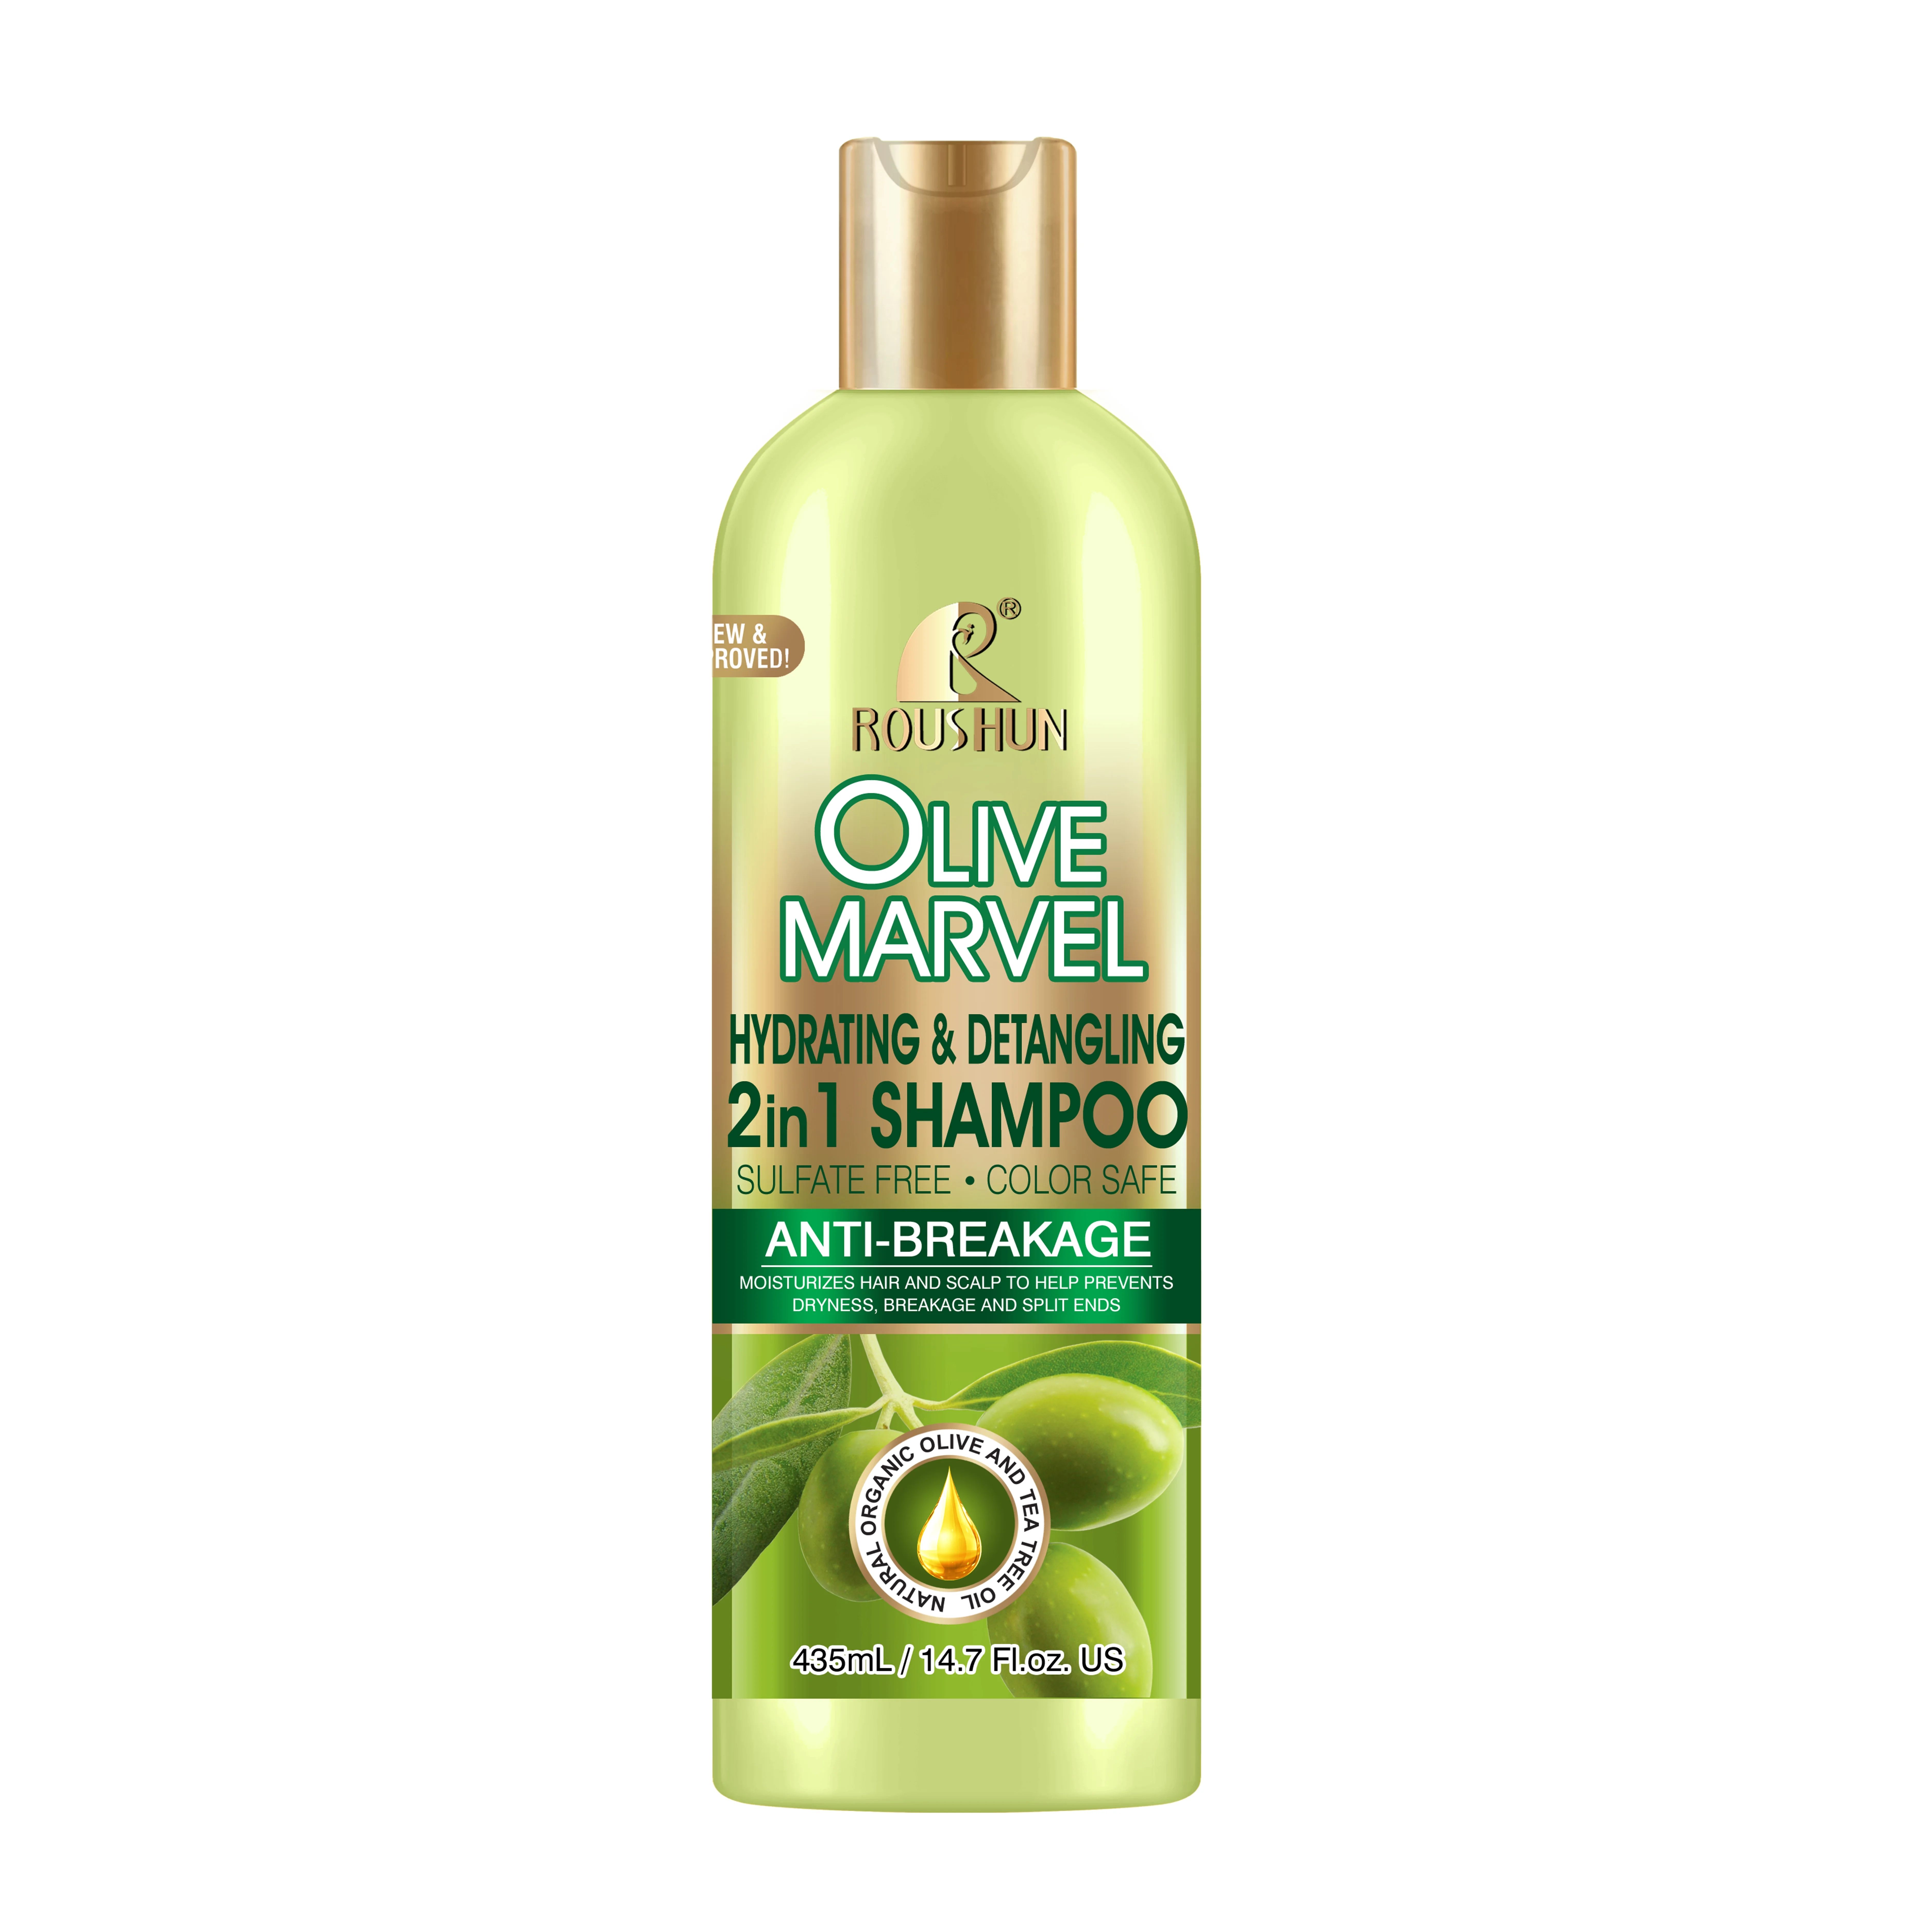 Moisturizer Anti-breakage Hair Shampoo 2 In 1 Formula With Olive Oil 435ml  By Roushun - Buy Hair Shampoo,Shampoo,Olive Oil Shampoo Product on  